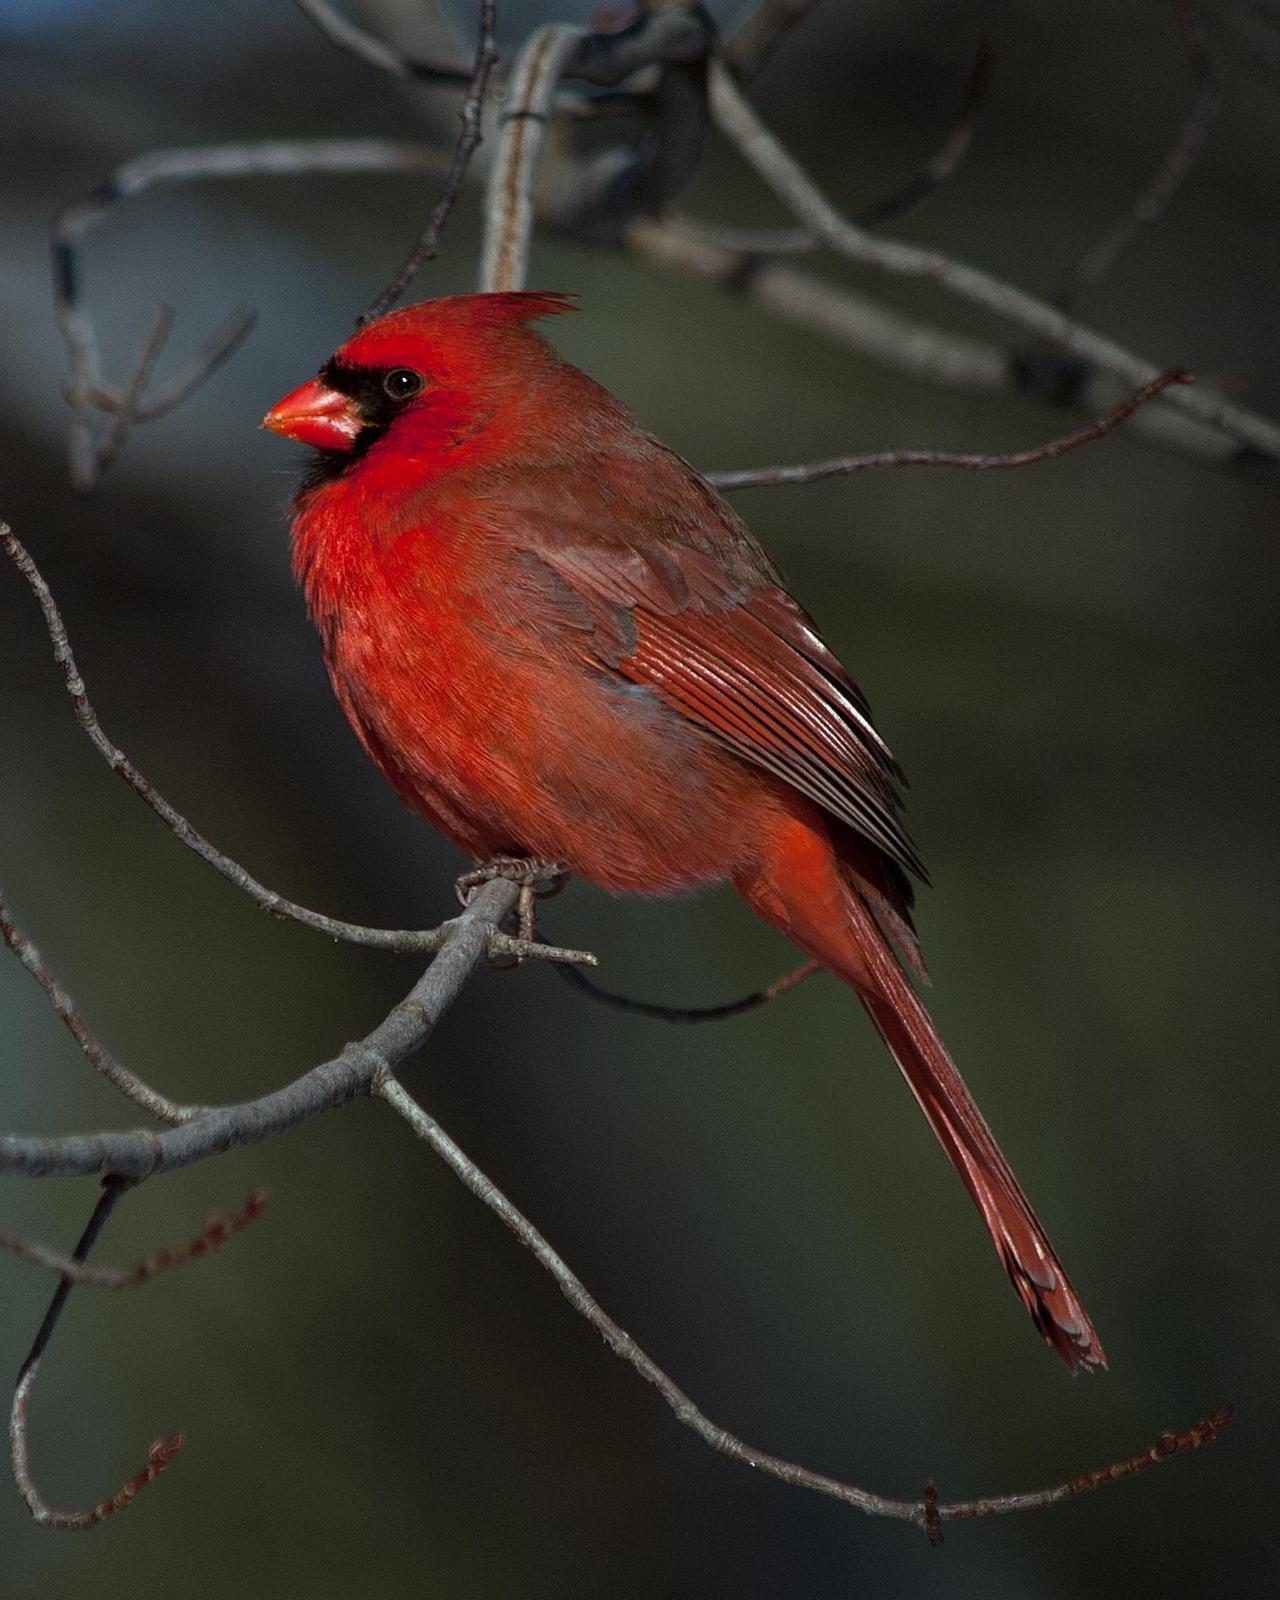 Northern Cardinal Photo by Mark Blassage